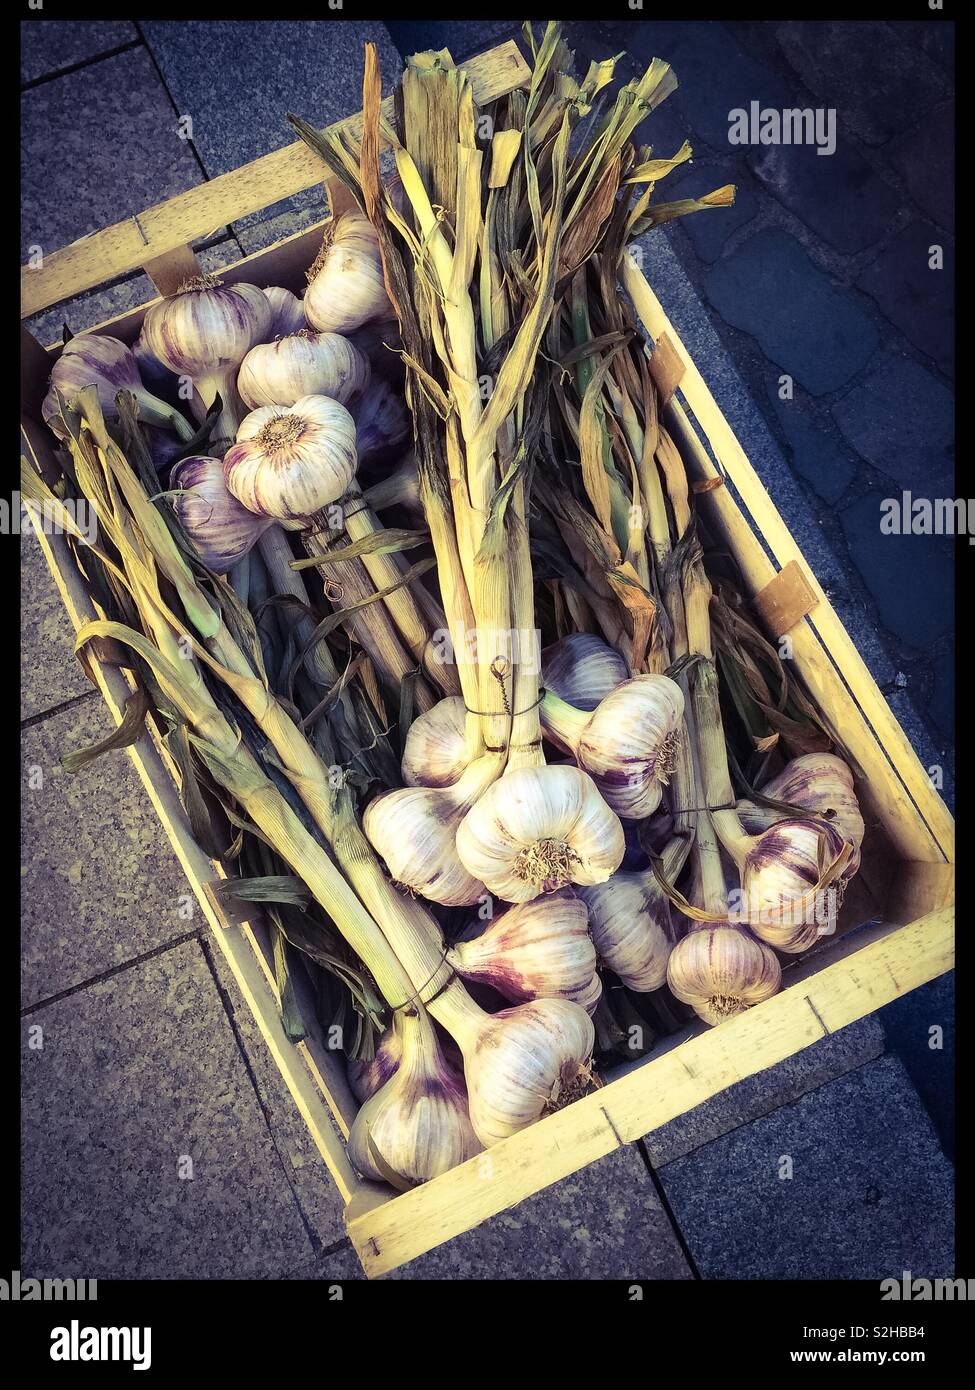 Fresh garlic Stock Photo